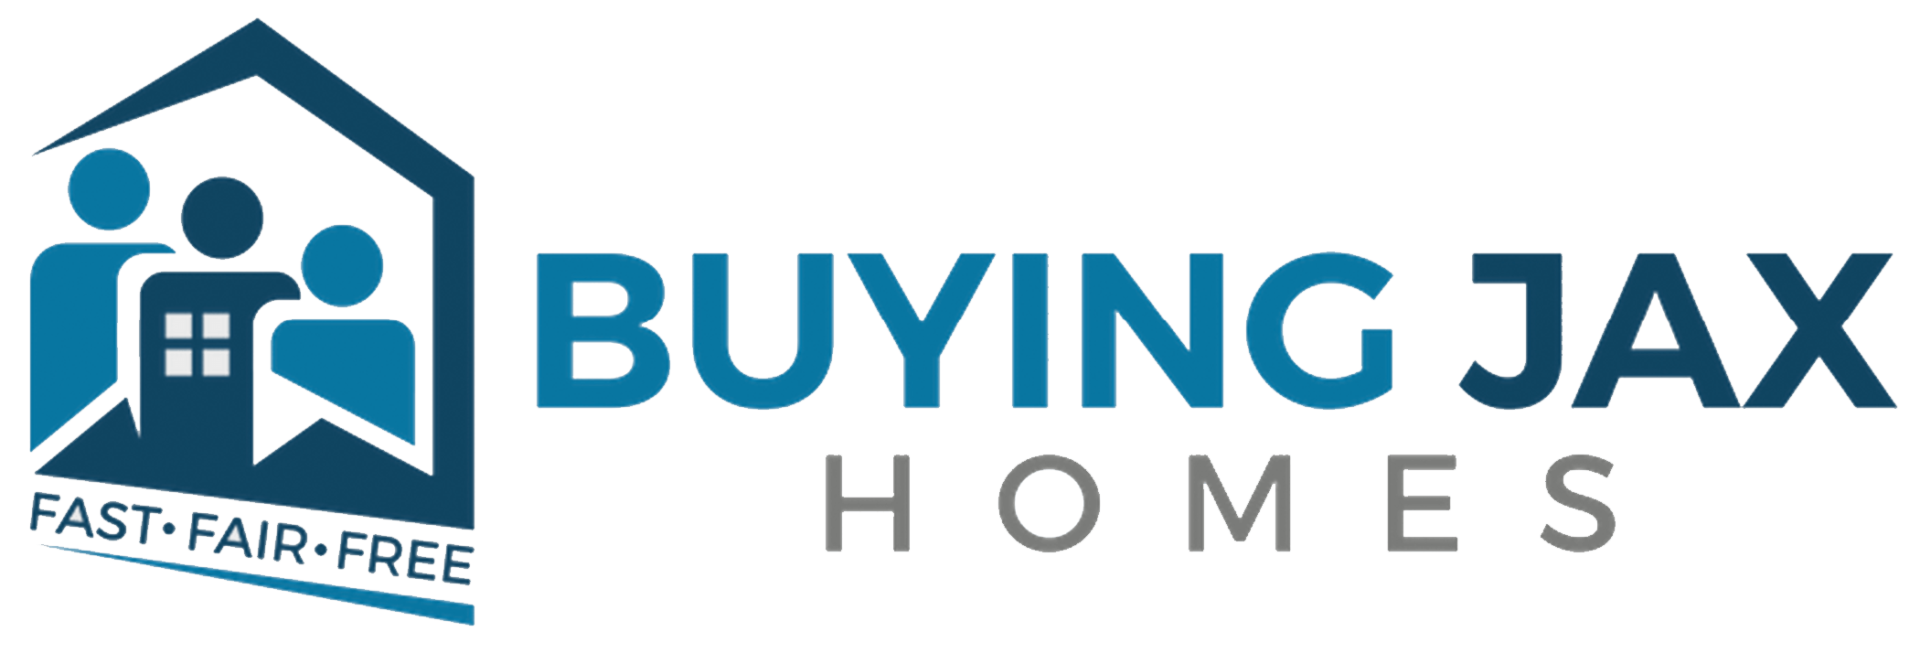 BUYING JAX HOMES  logo